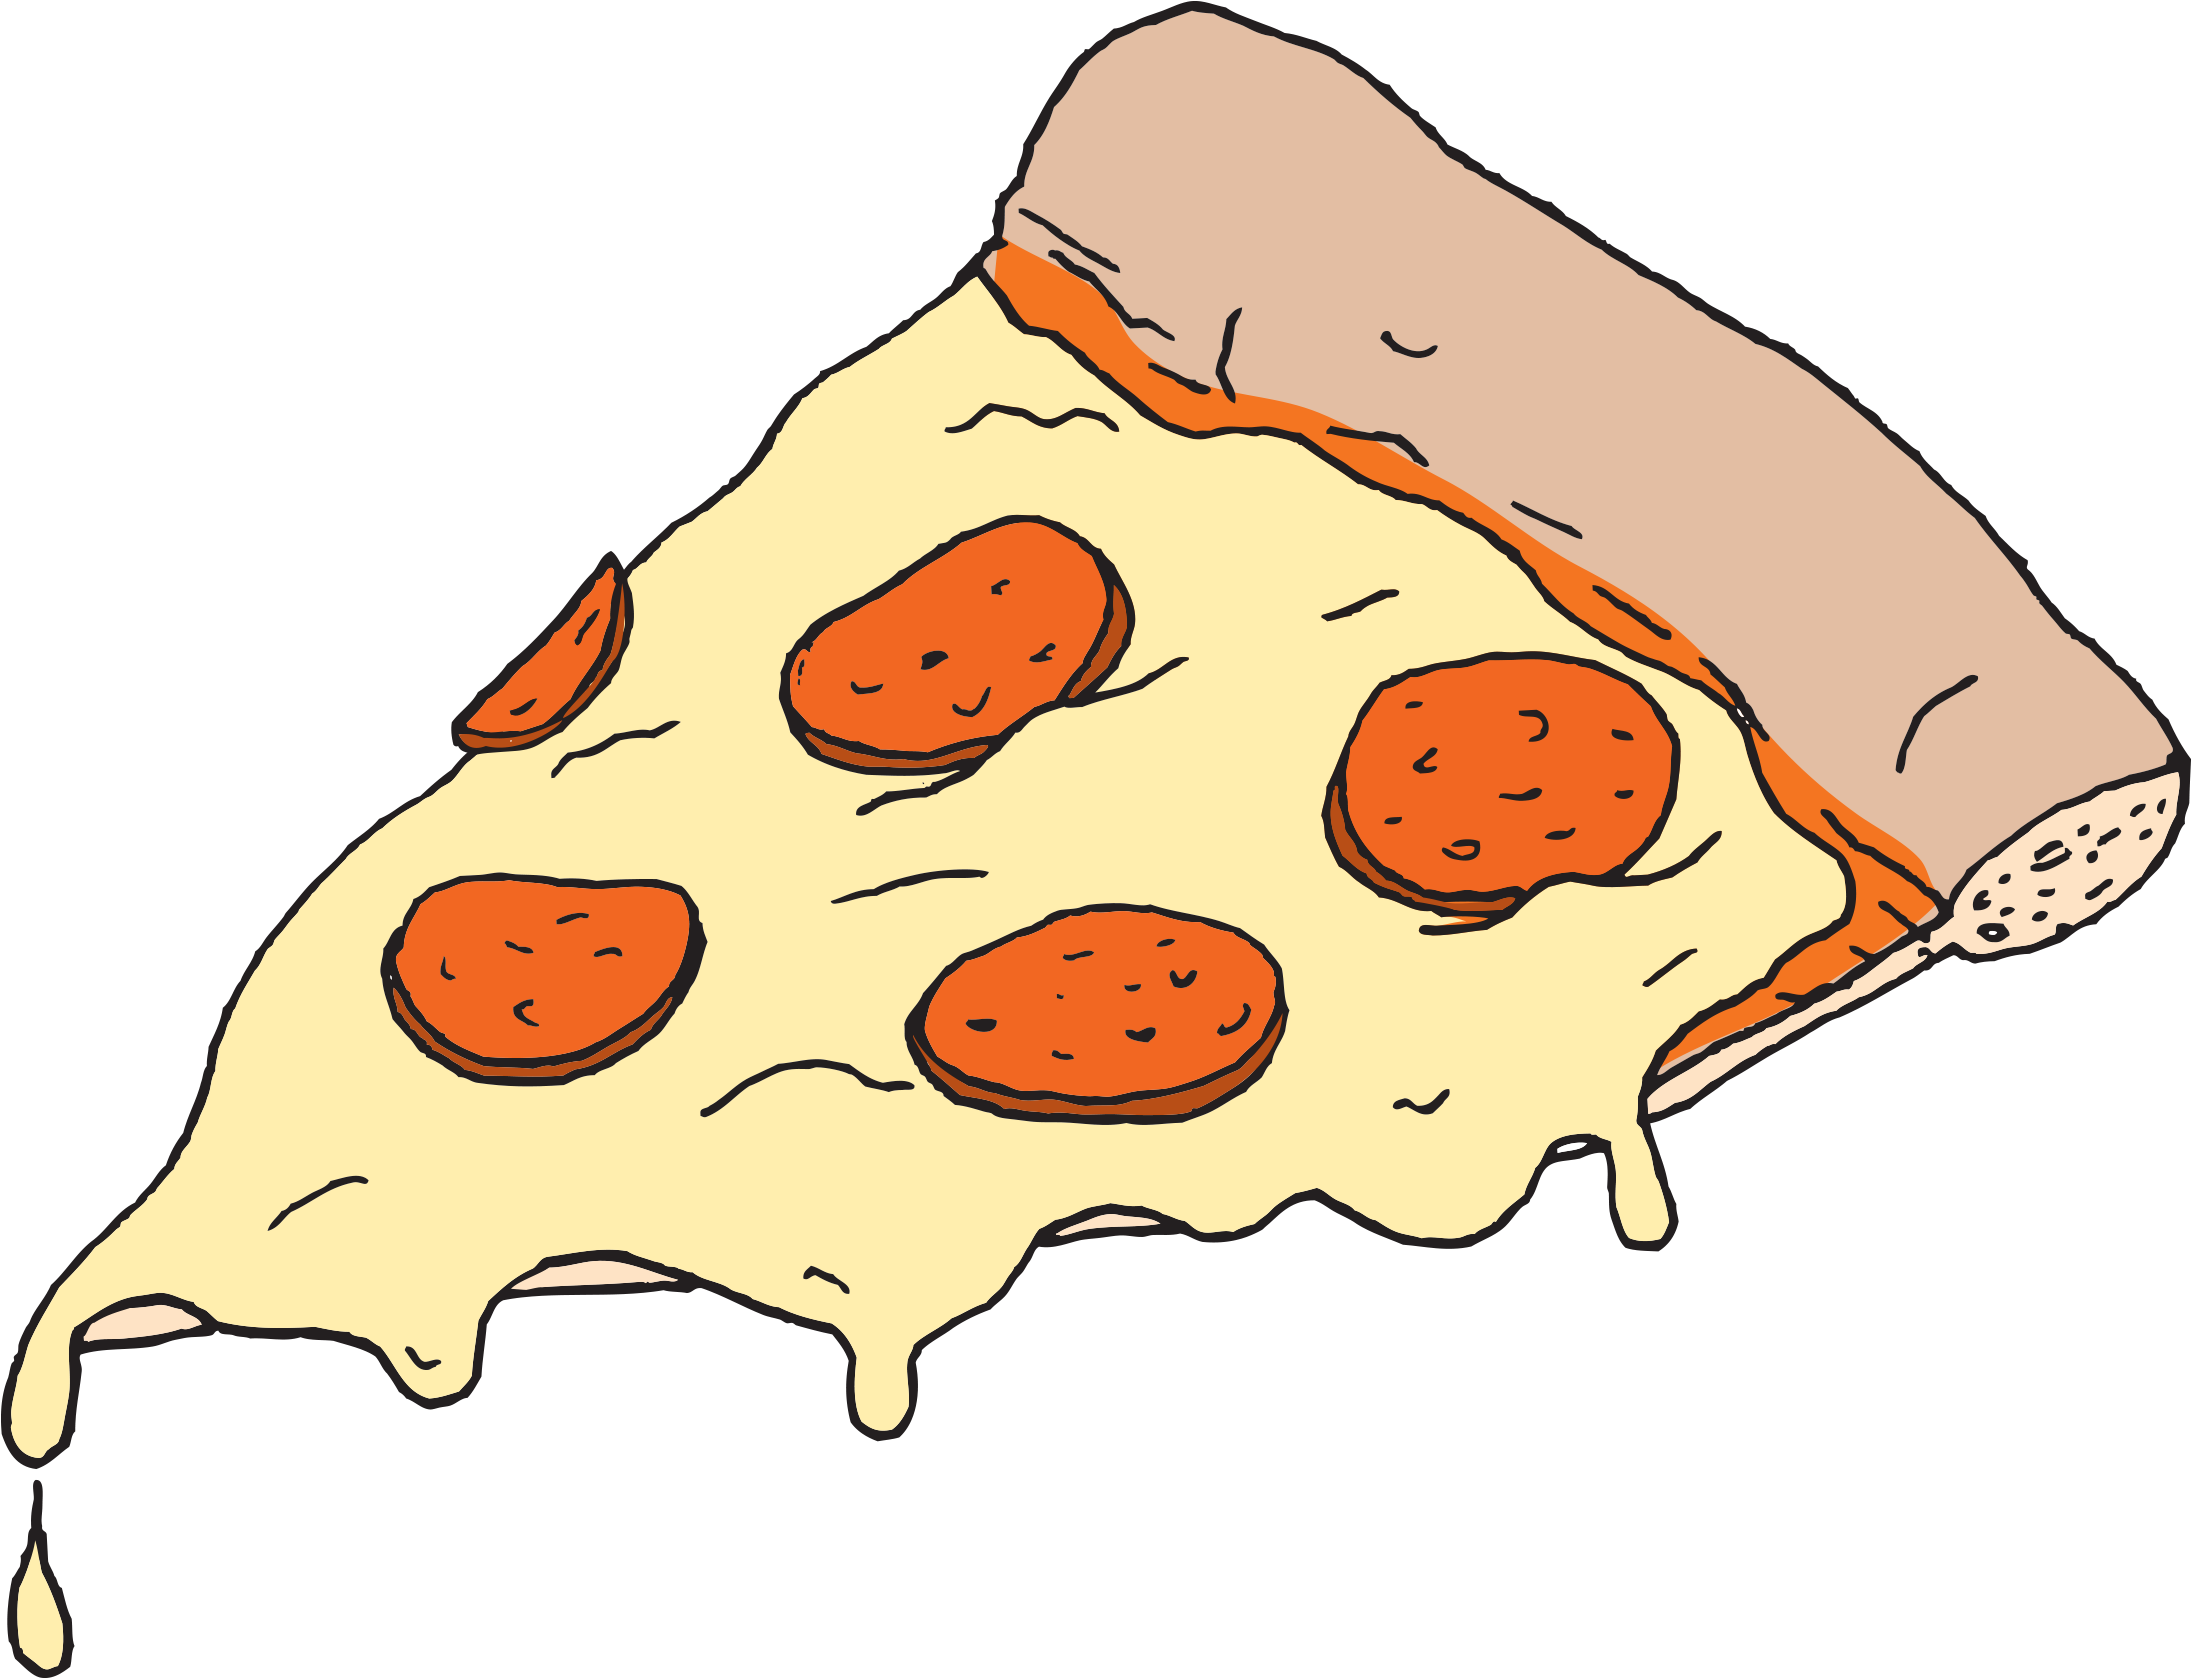 3000 X 3000 1 - Melting Pizza Slice (3000x3000)